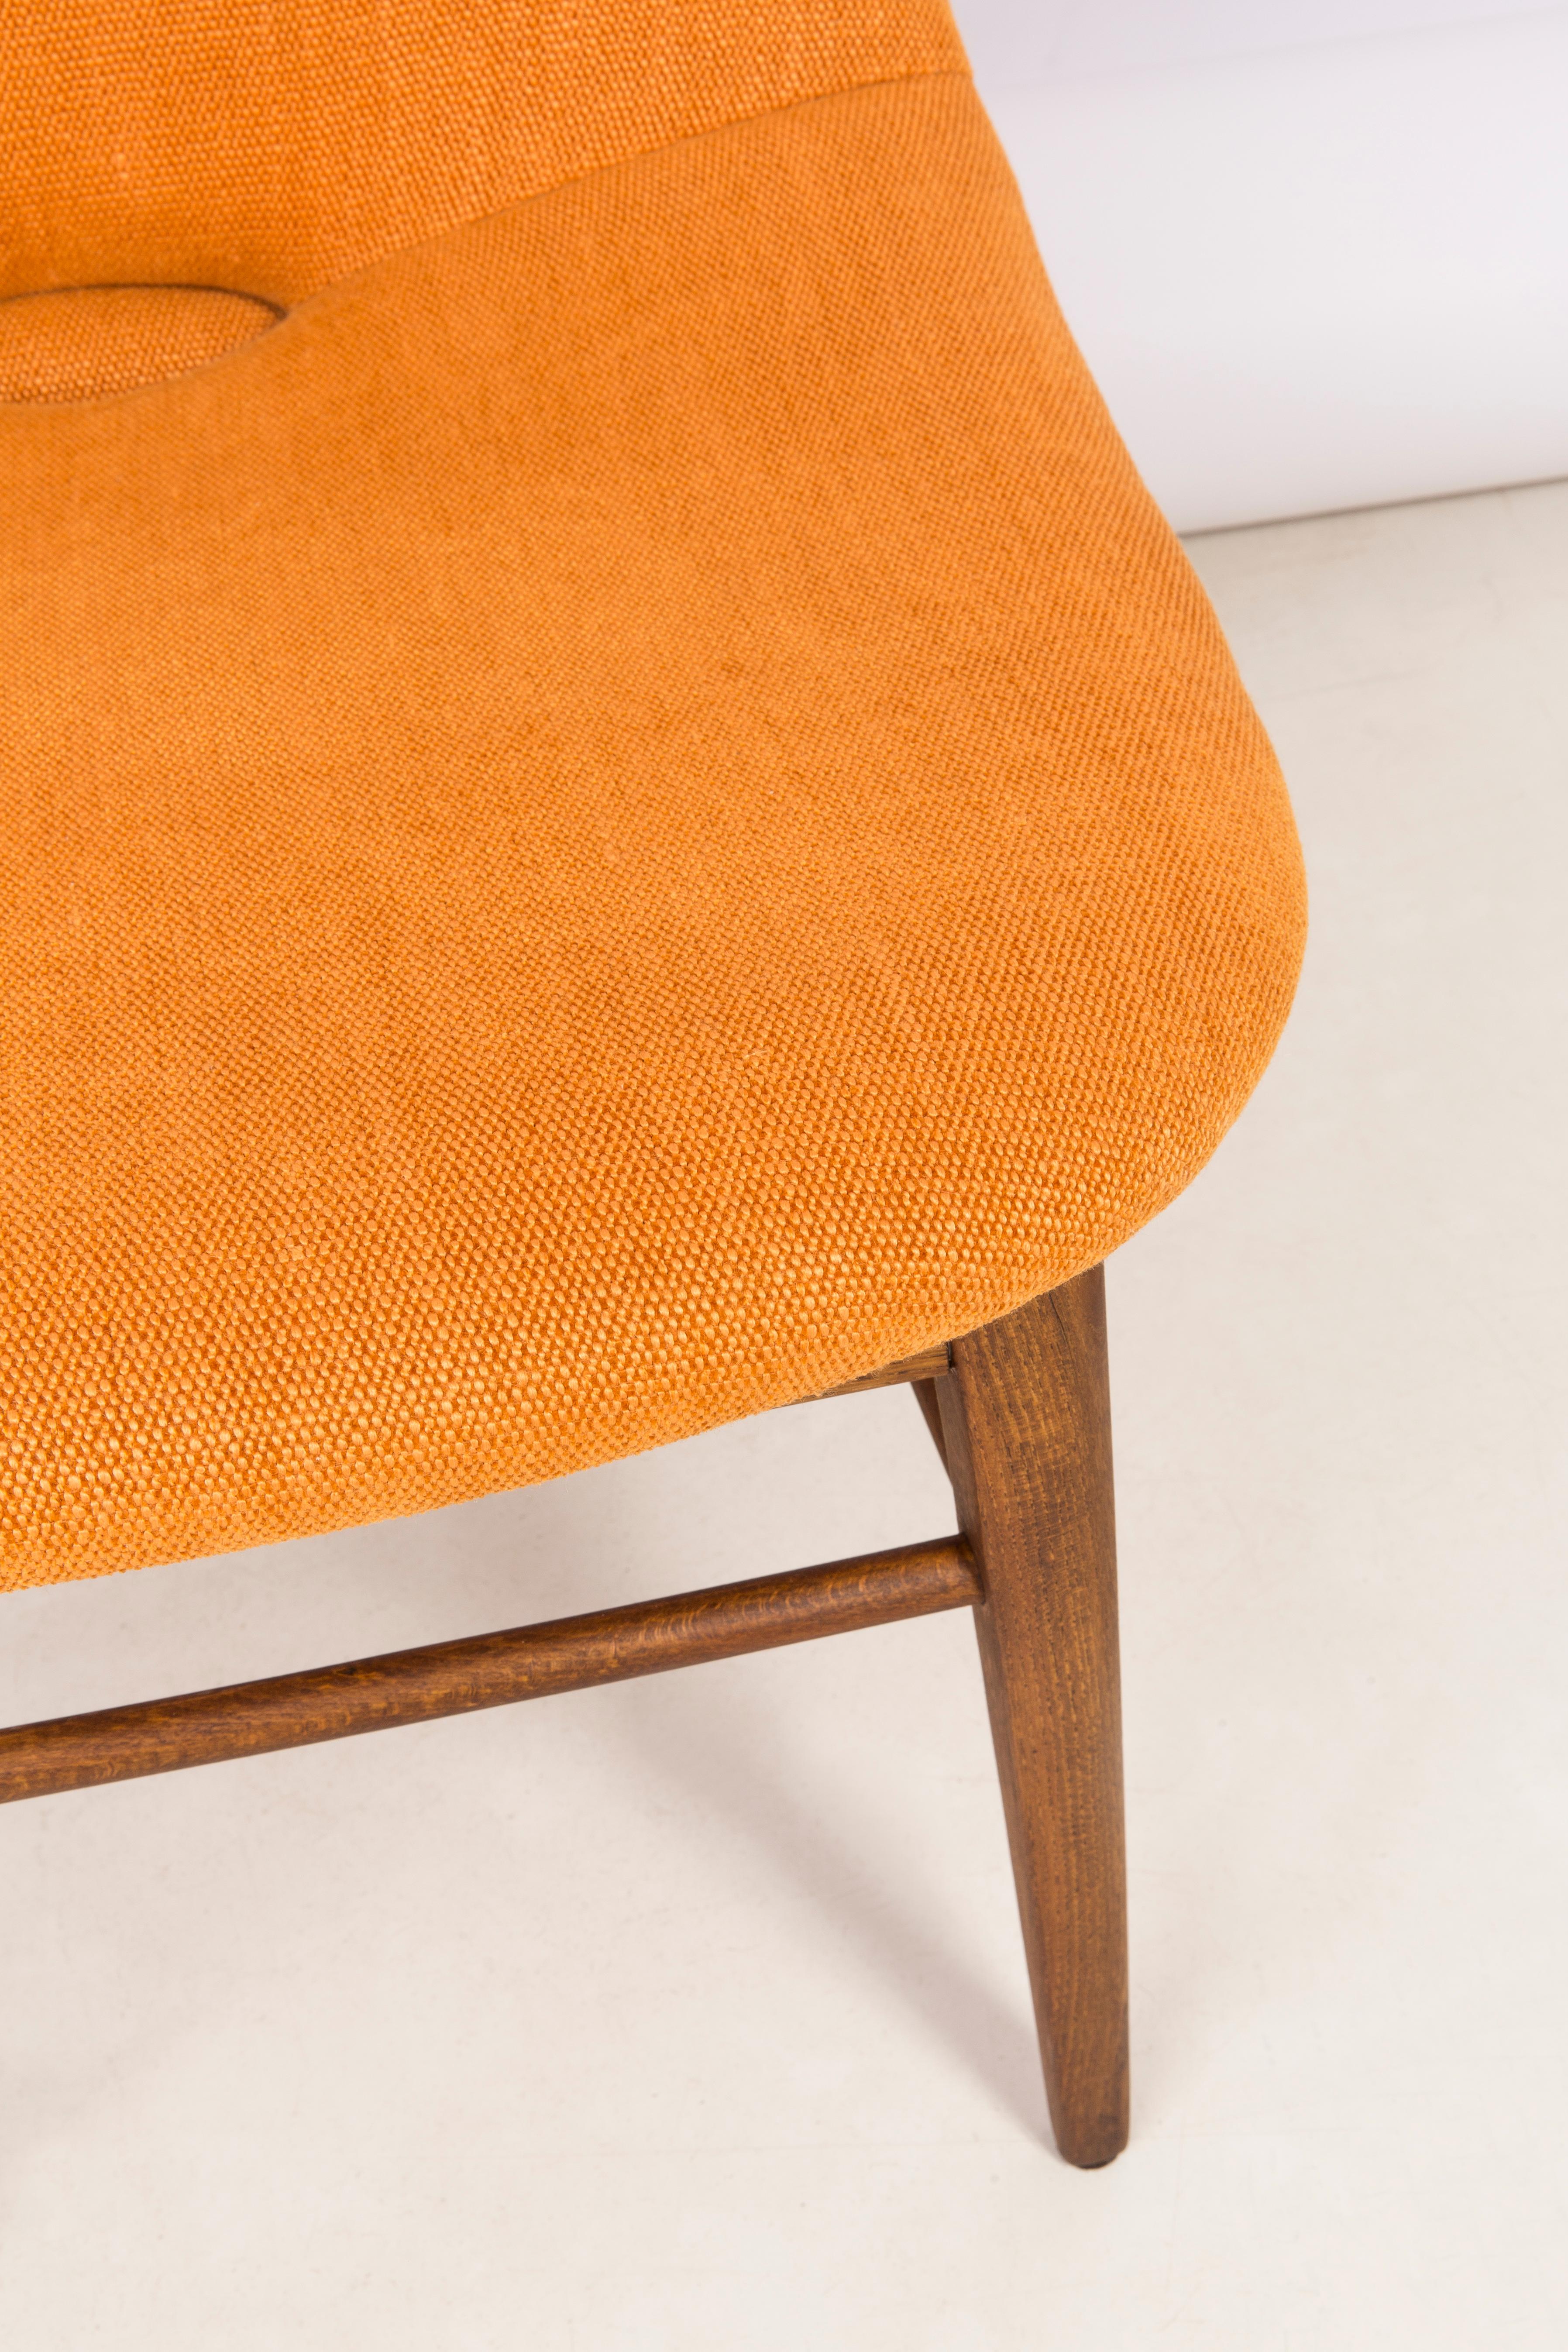 Rare 20th Century Orange Shell Chair, H.Lachert, 1960s For Sale 7